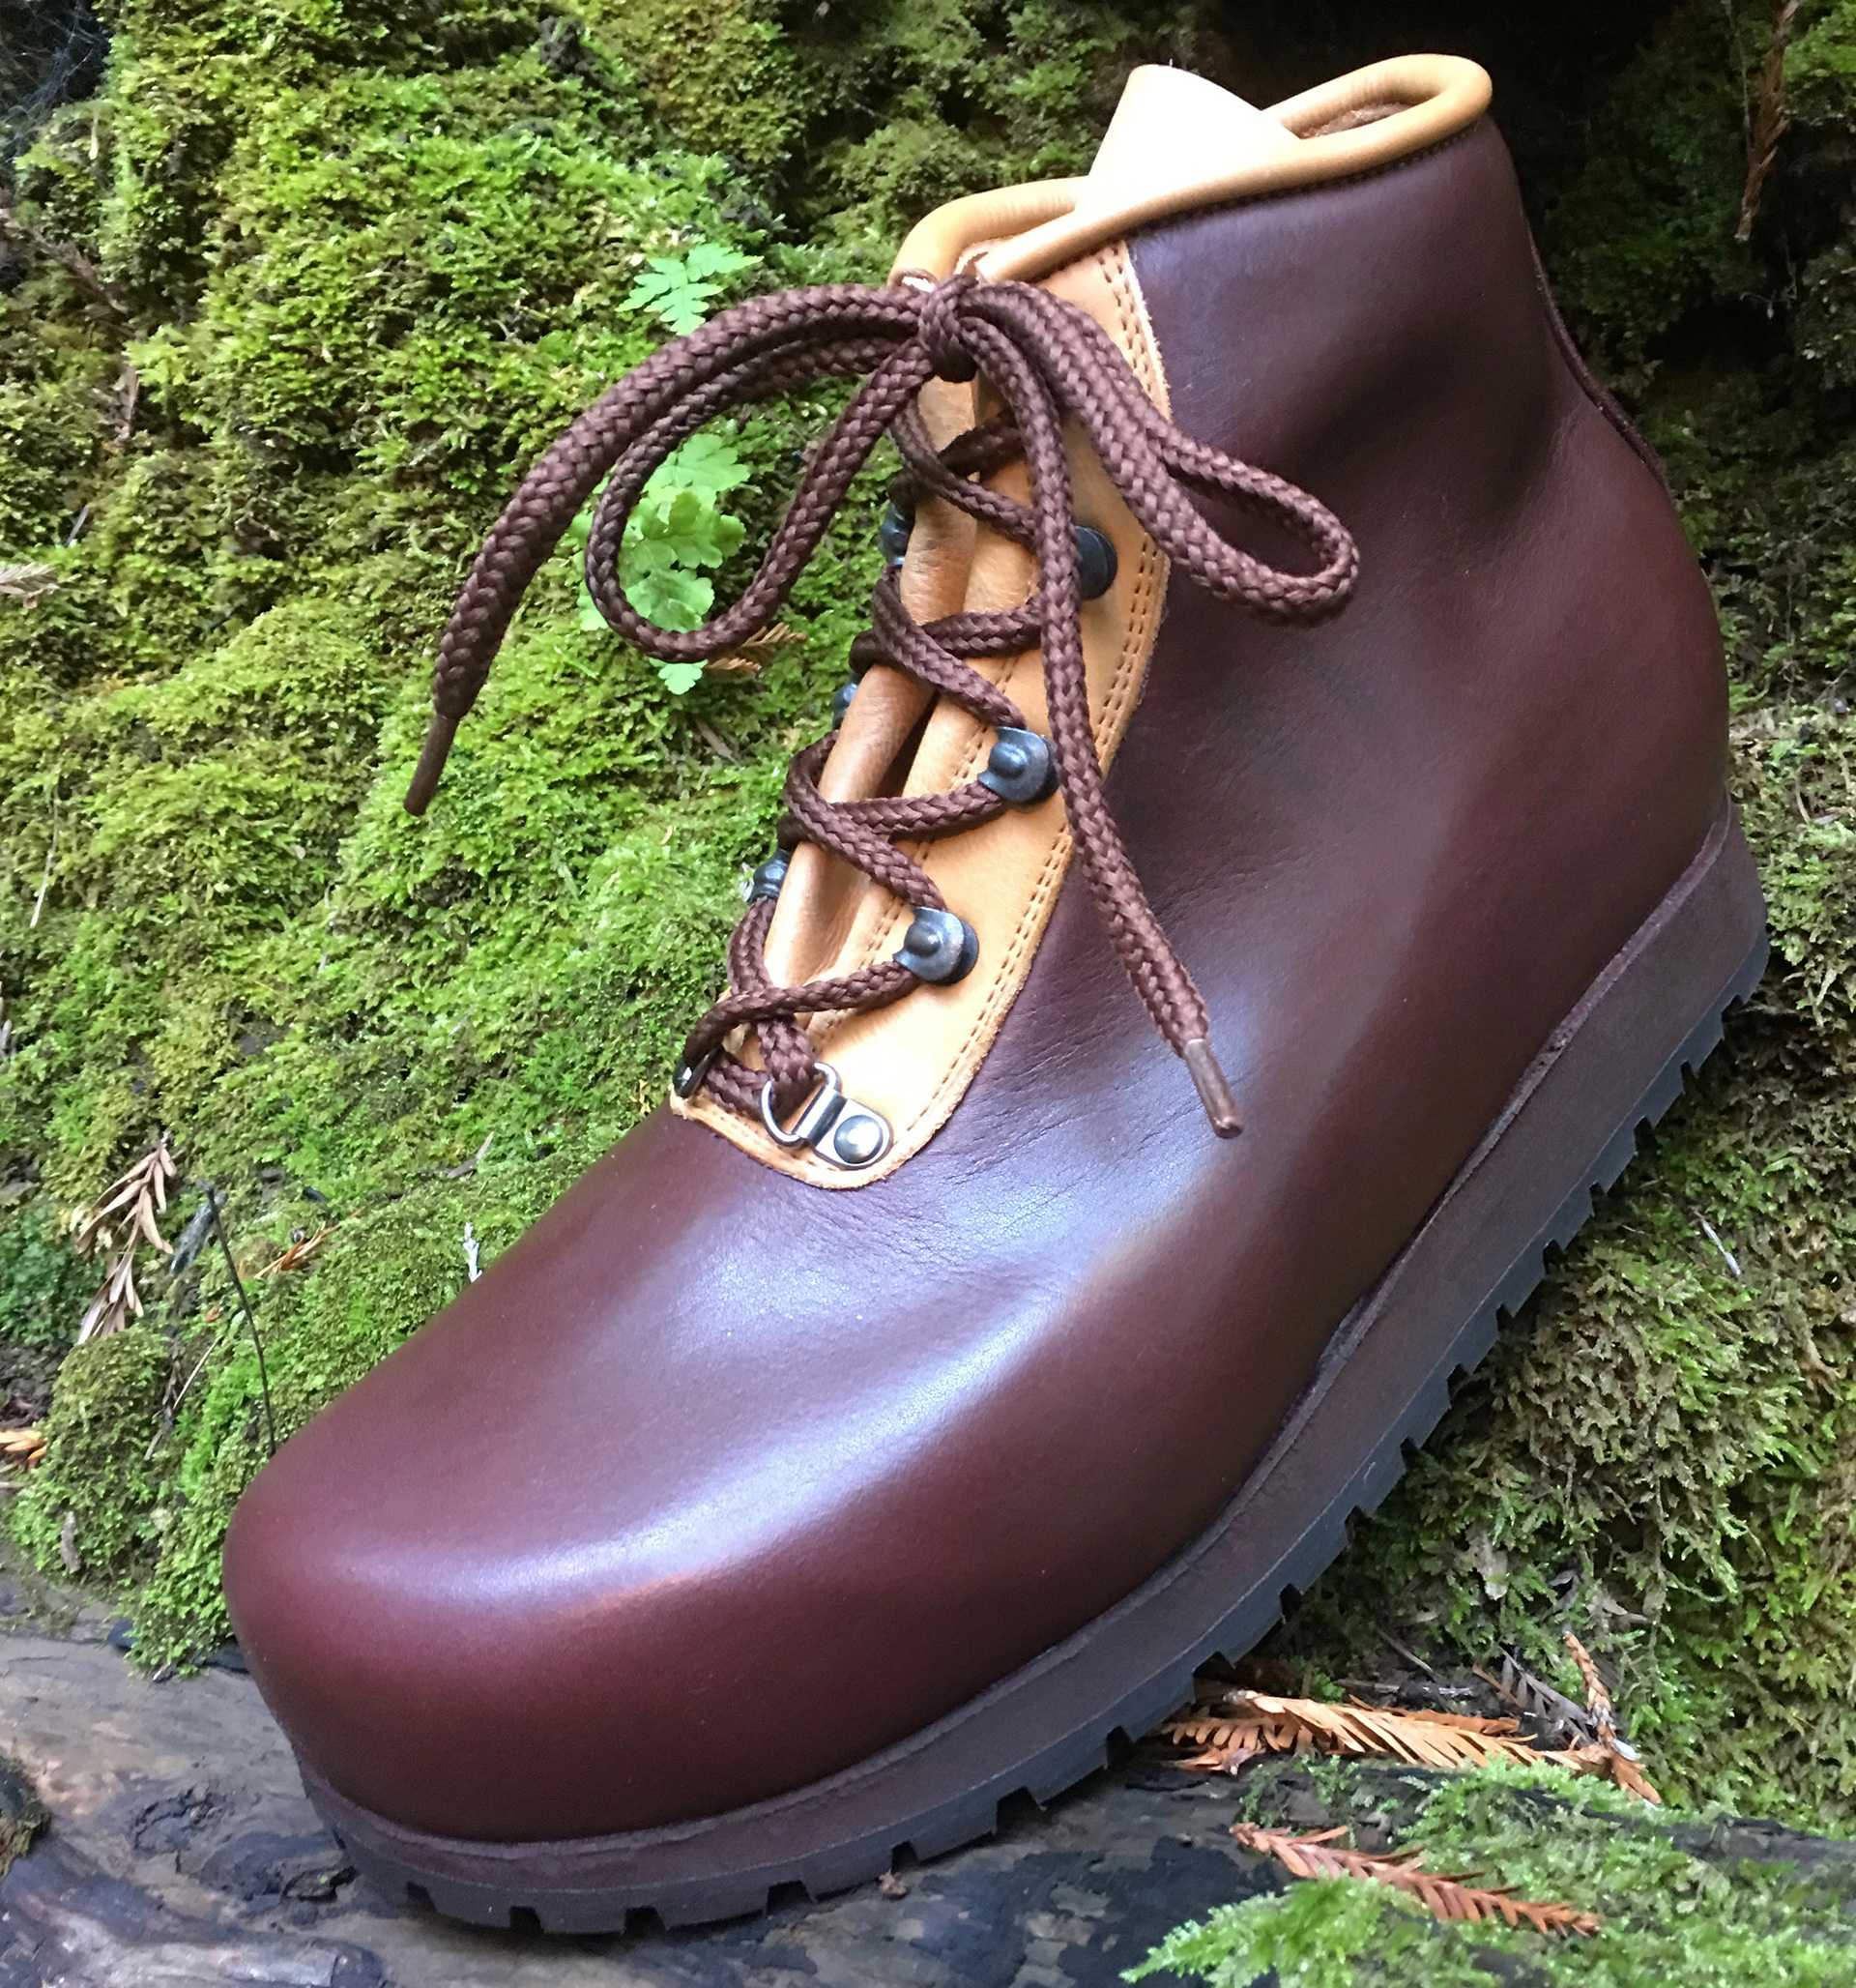 Buy > custom hiking boots > in stock